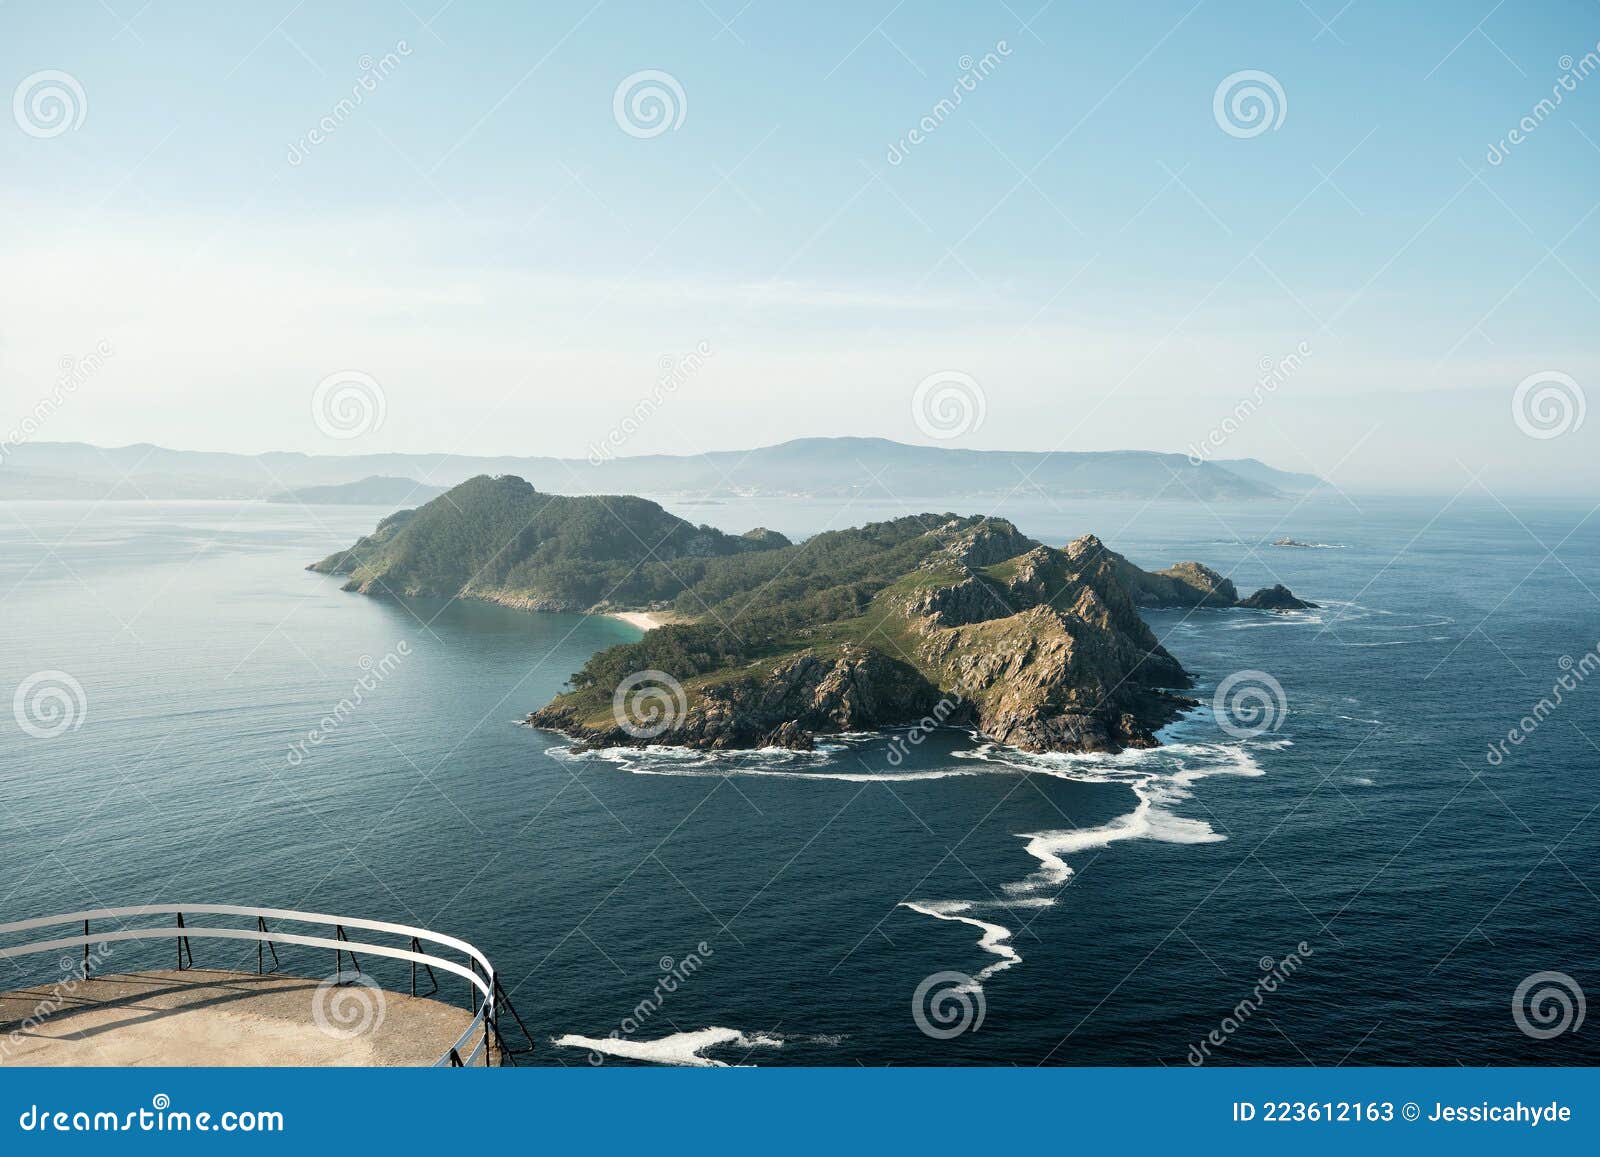 islas cies, atlantic islands of galicia national park, pontevedra, spain